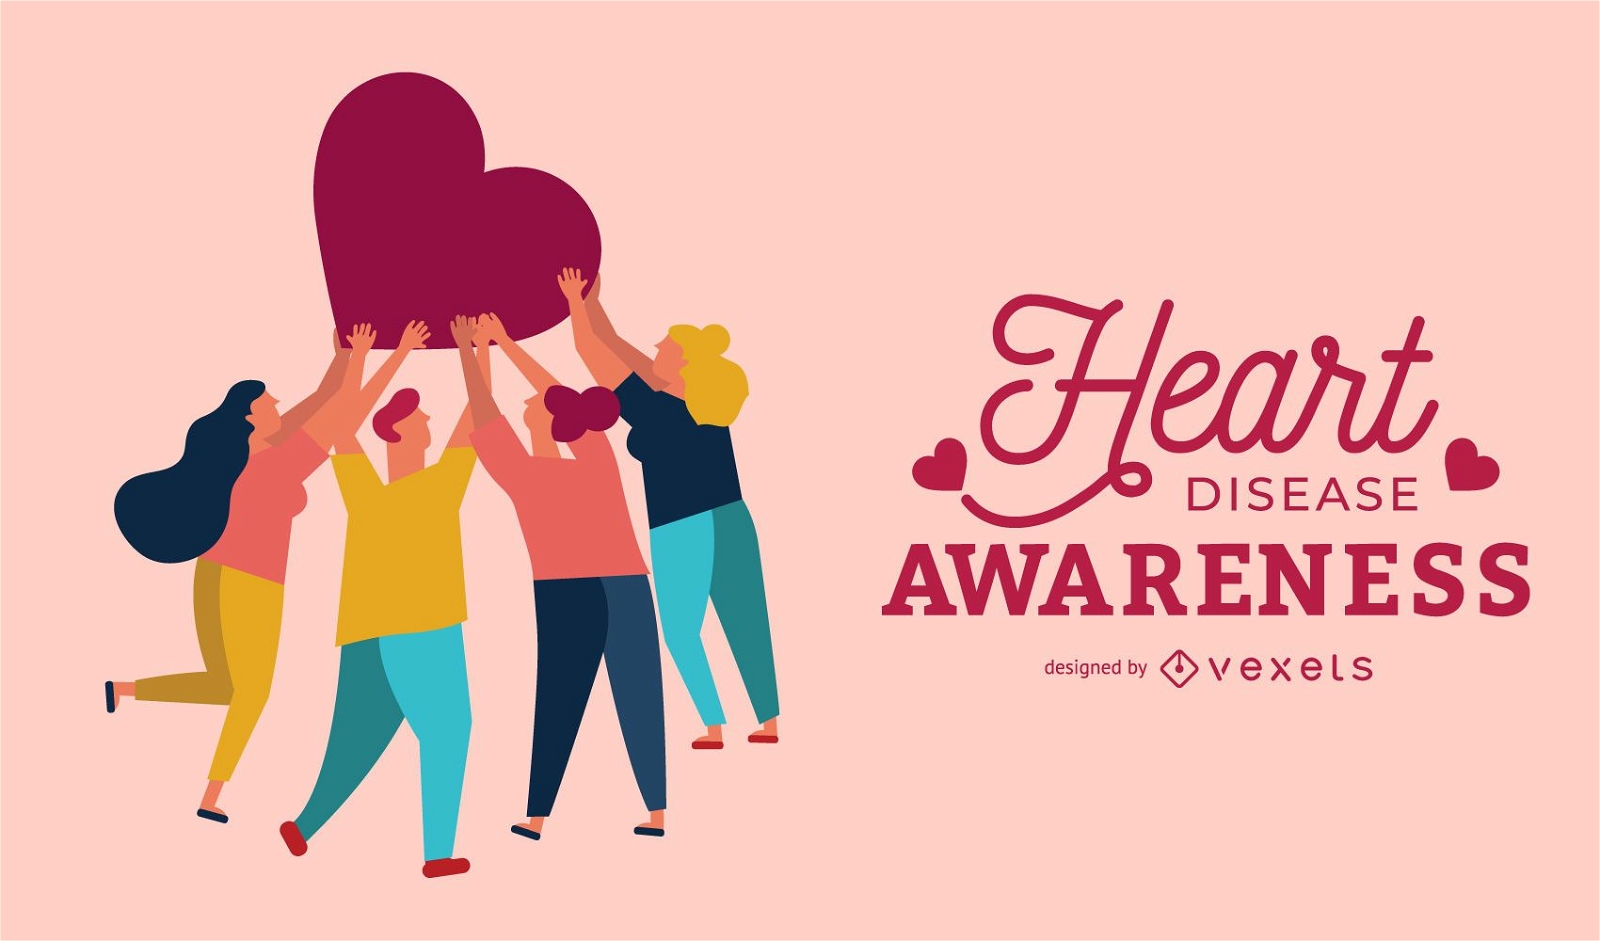 Heart disease awareness illustration design